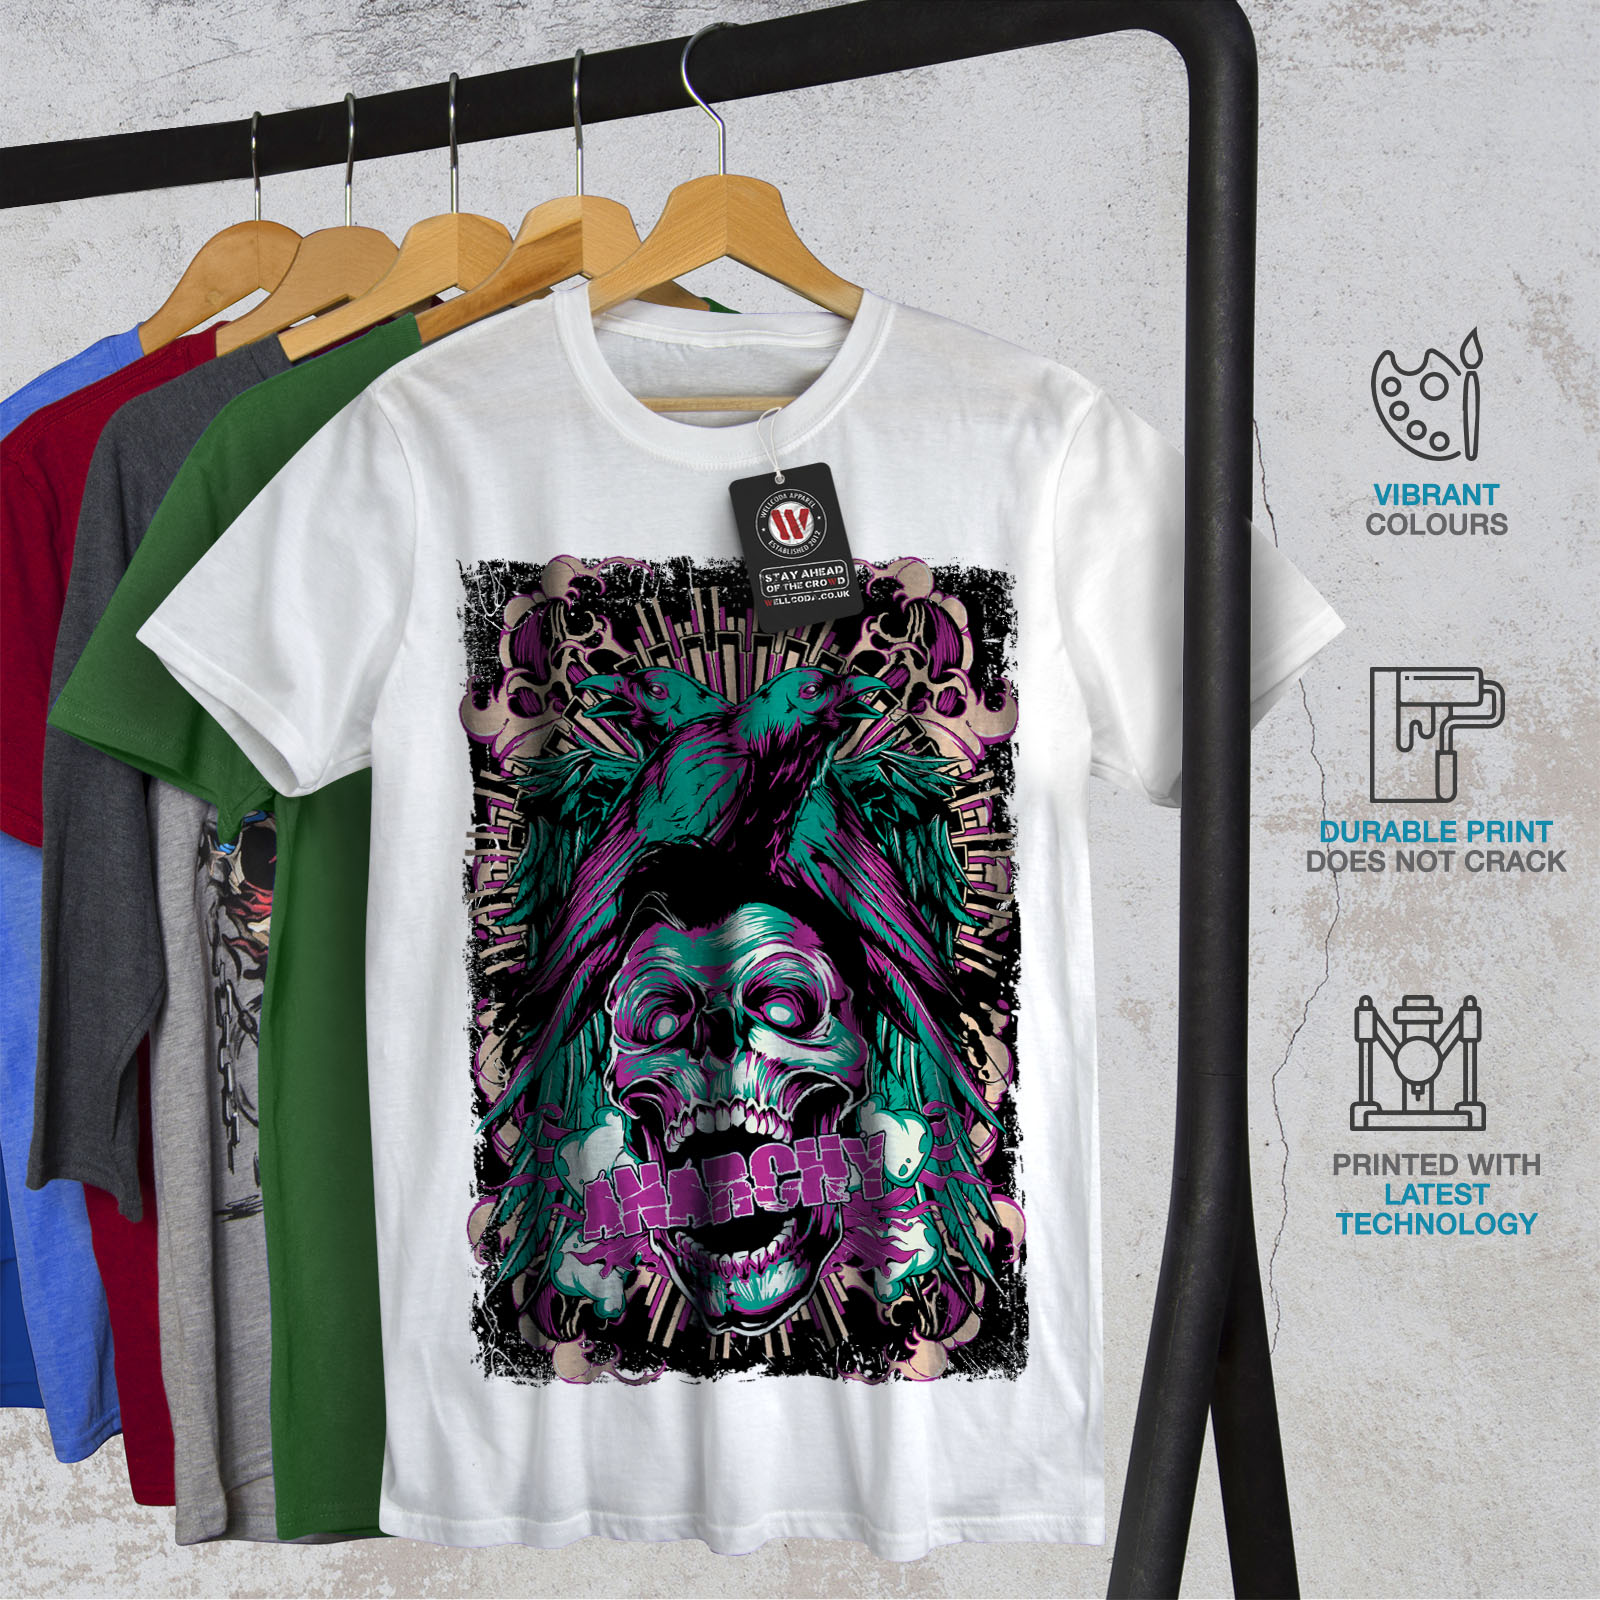 Wellcoda Revenge Crow Death Skull Mens T-shirt, Rave Graphic Design ...